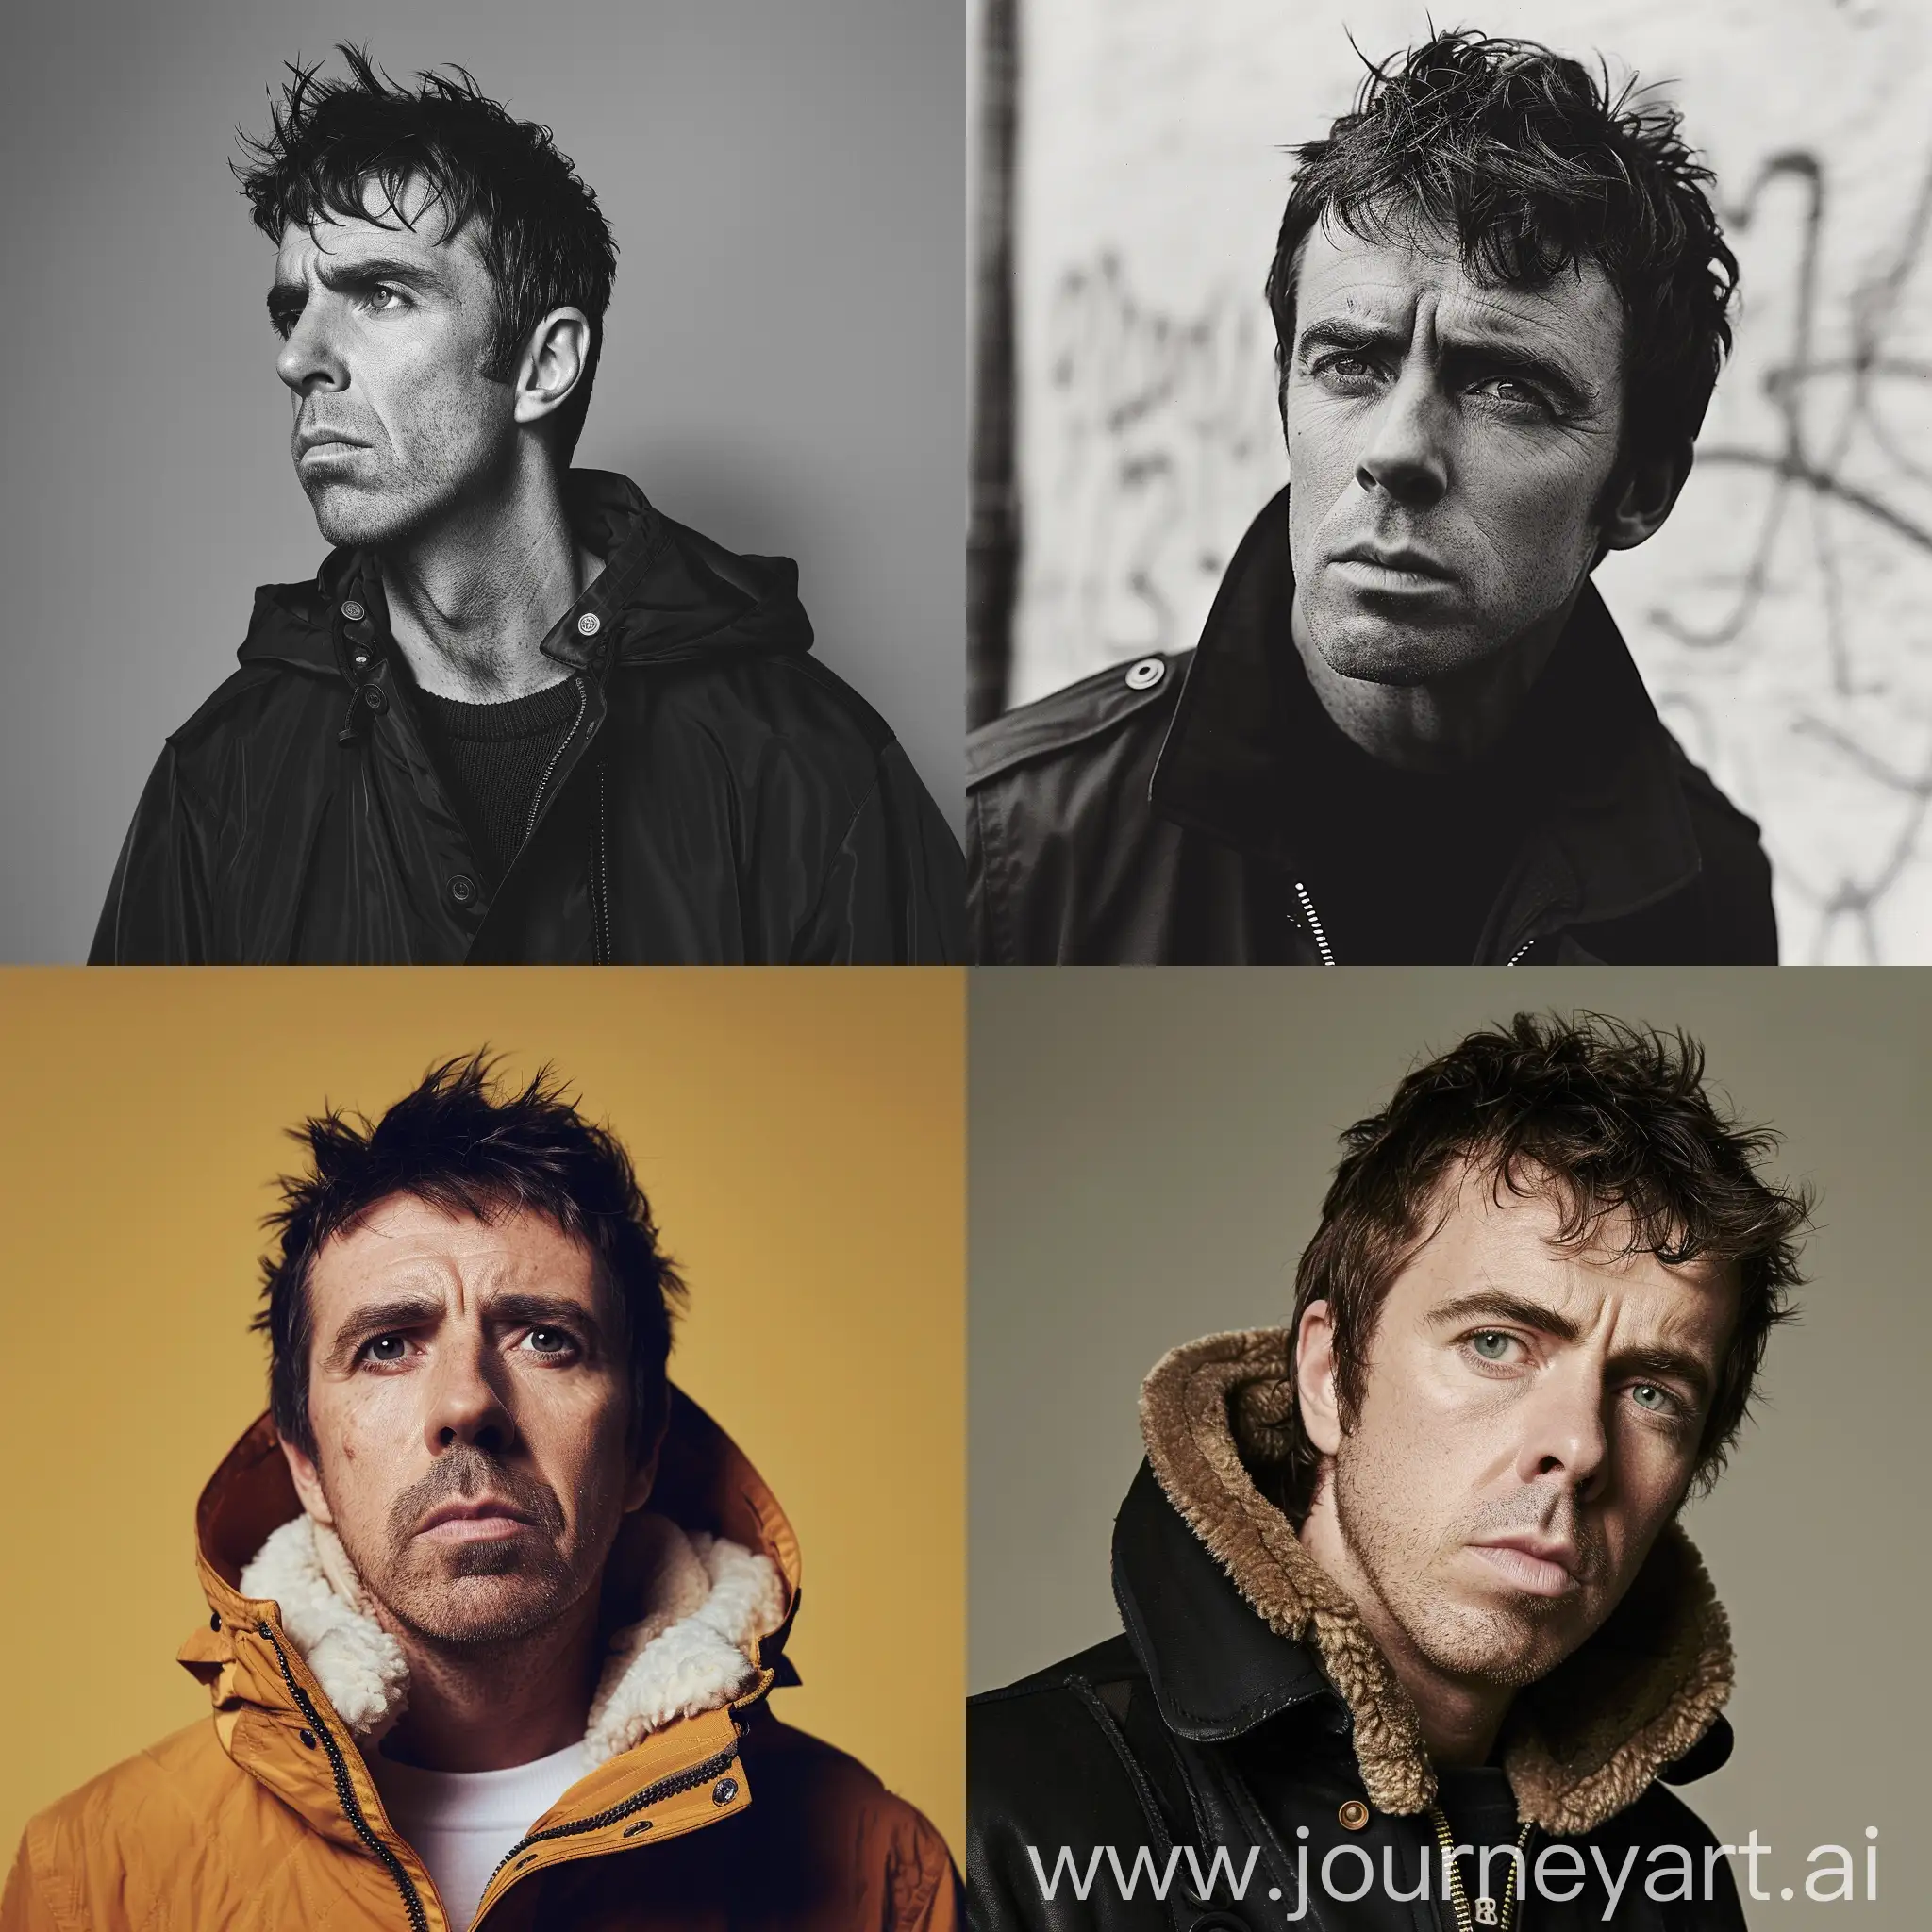 Liam-Gallagher-Portrait-in-Square-Format